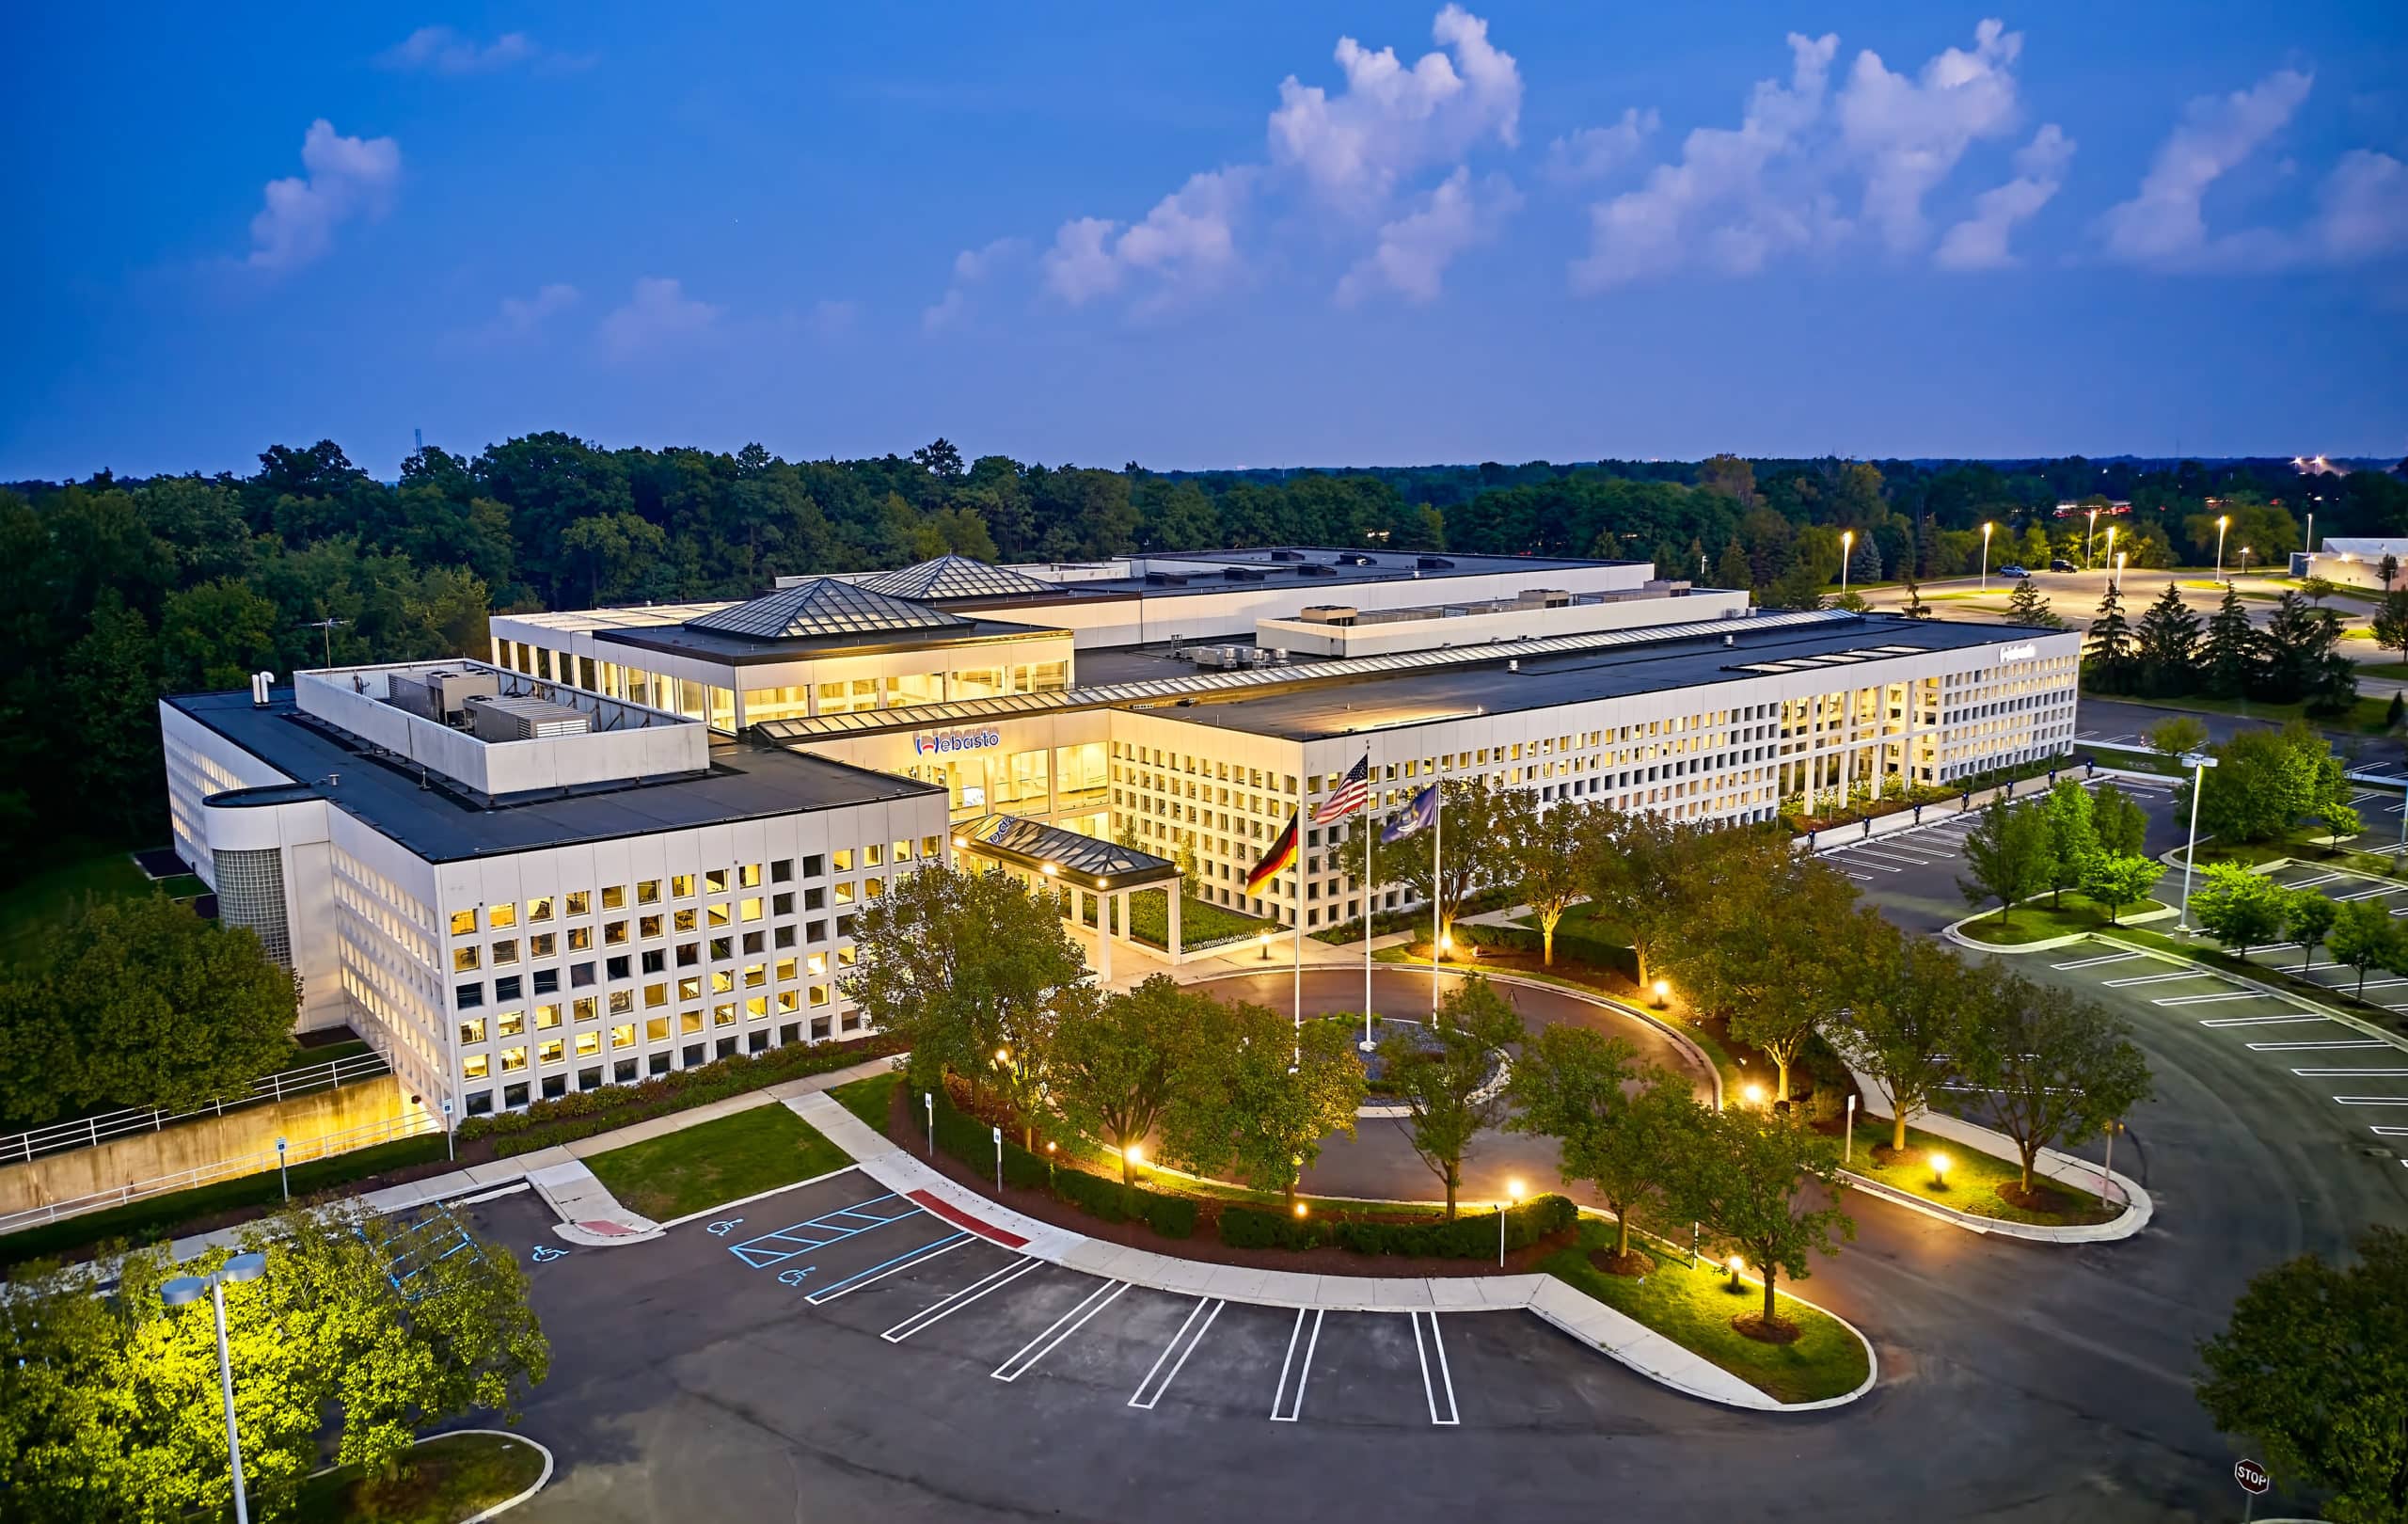 KIRCO MANIX Announces Completion of Webasto’s New Americas Headquarters in Auburn Hills, Mich.